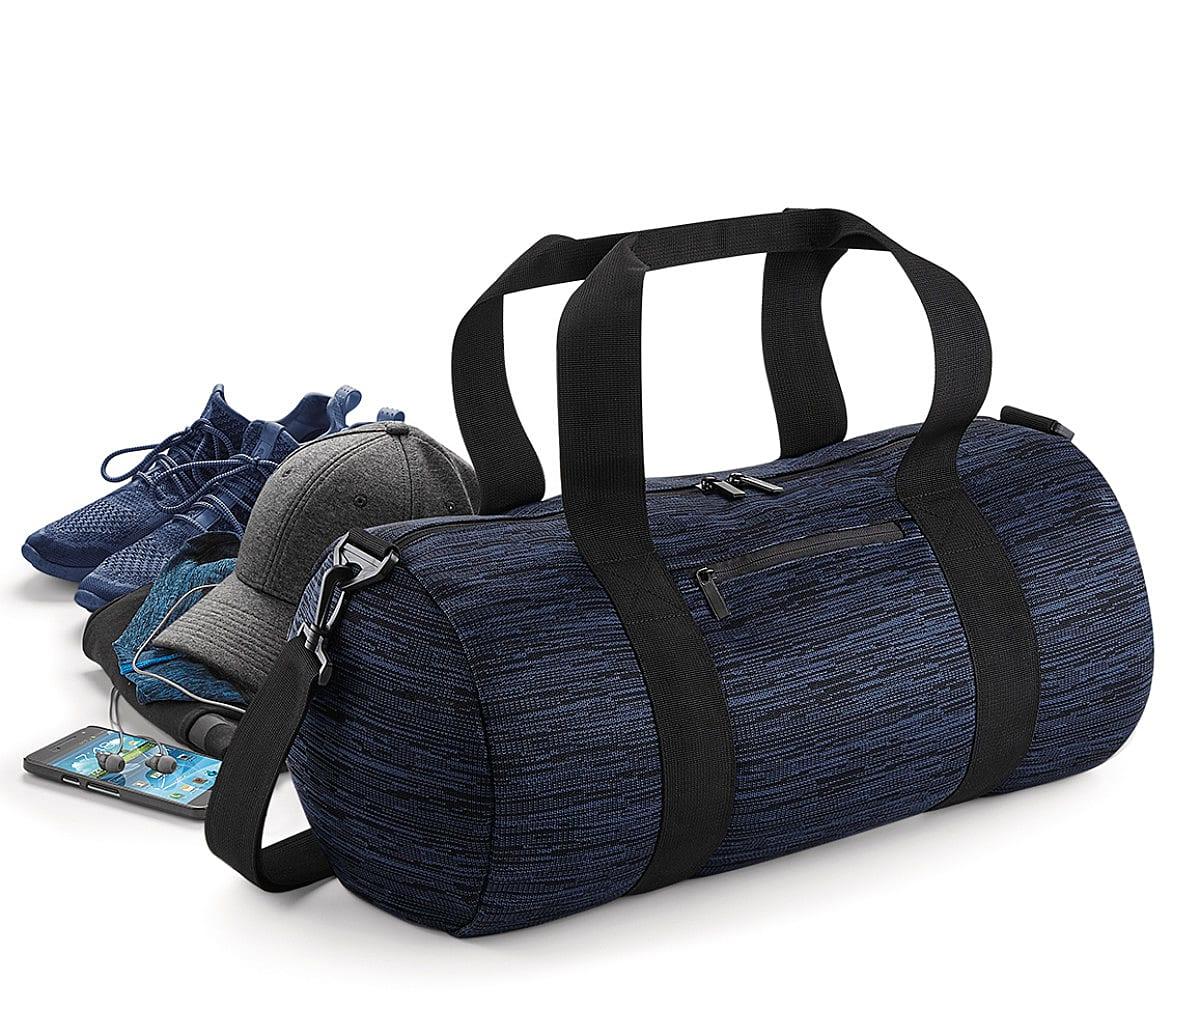 Bagbase Duo Knit Barrel Bag in Navy / Black (Product Code: BG196)